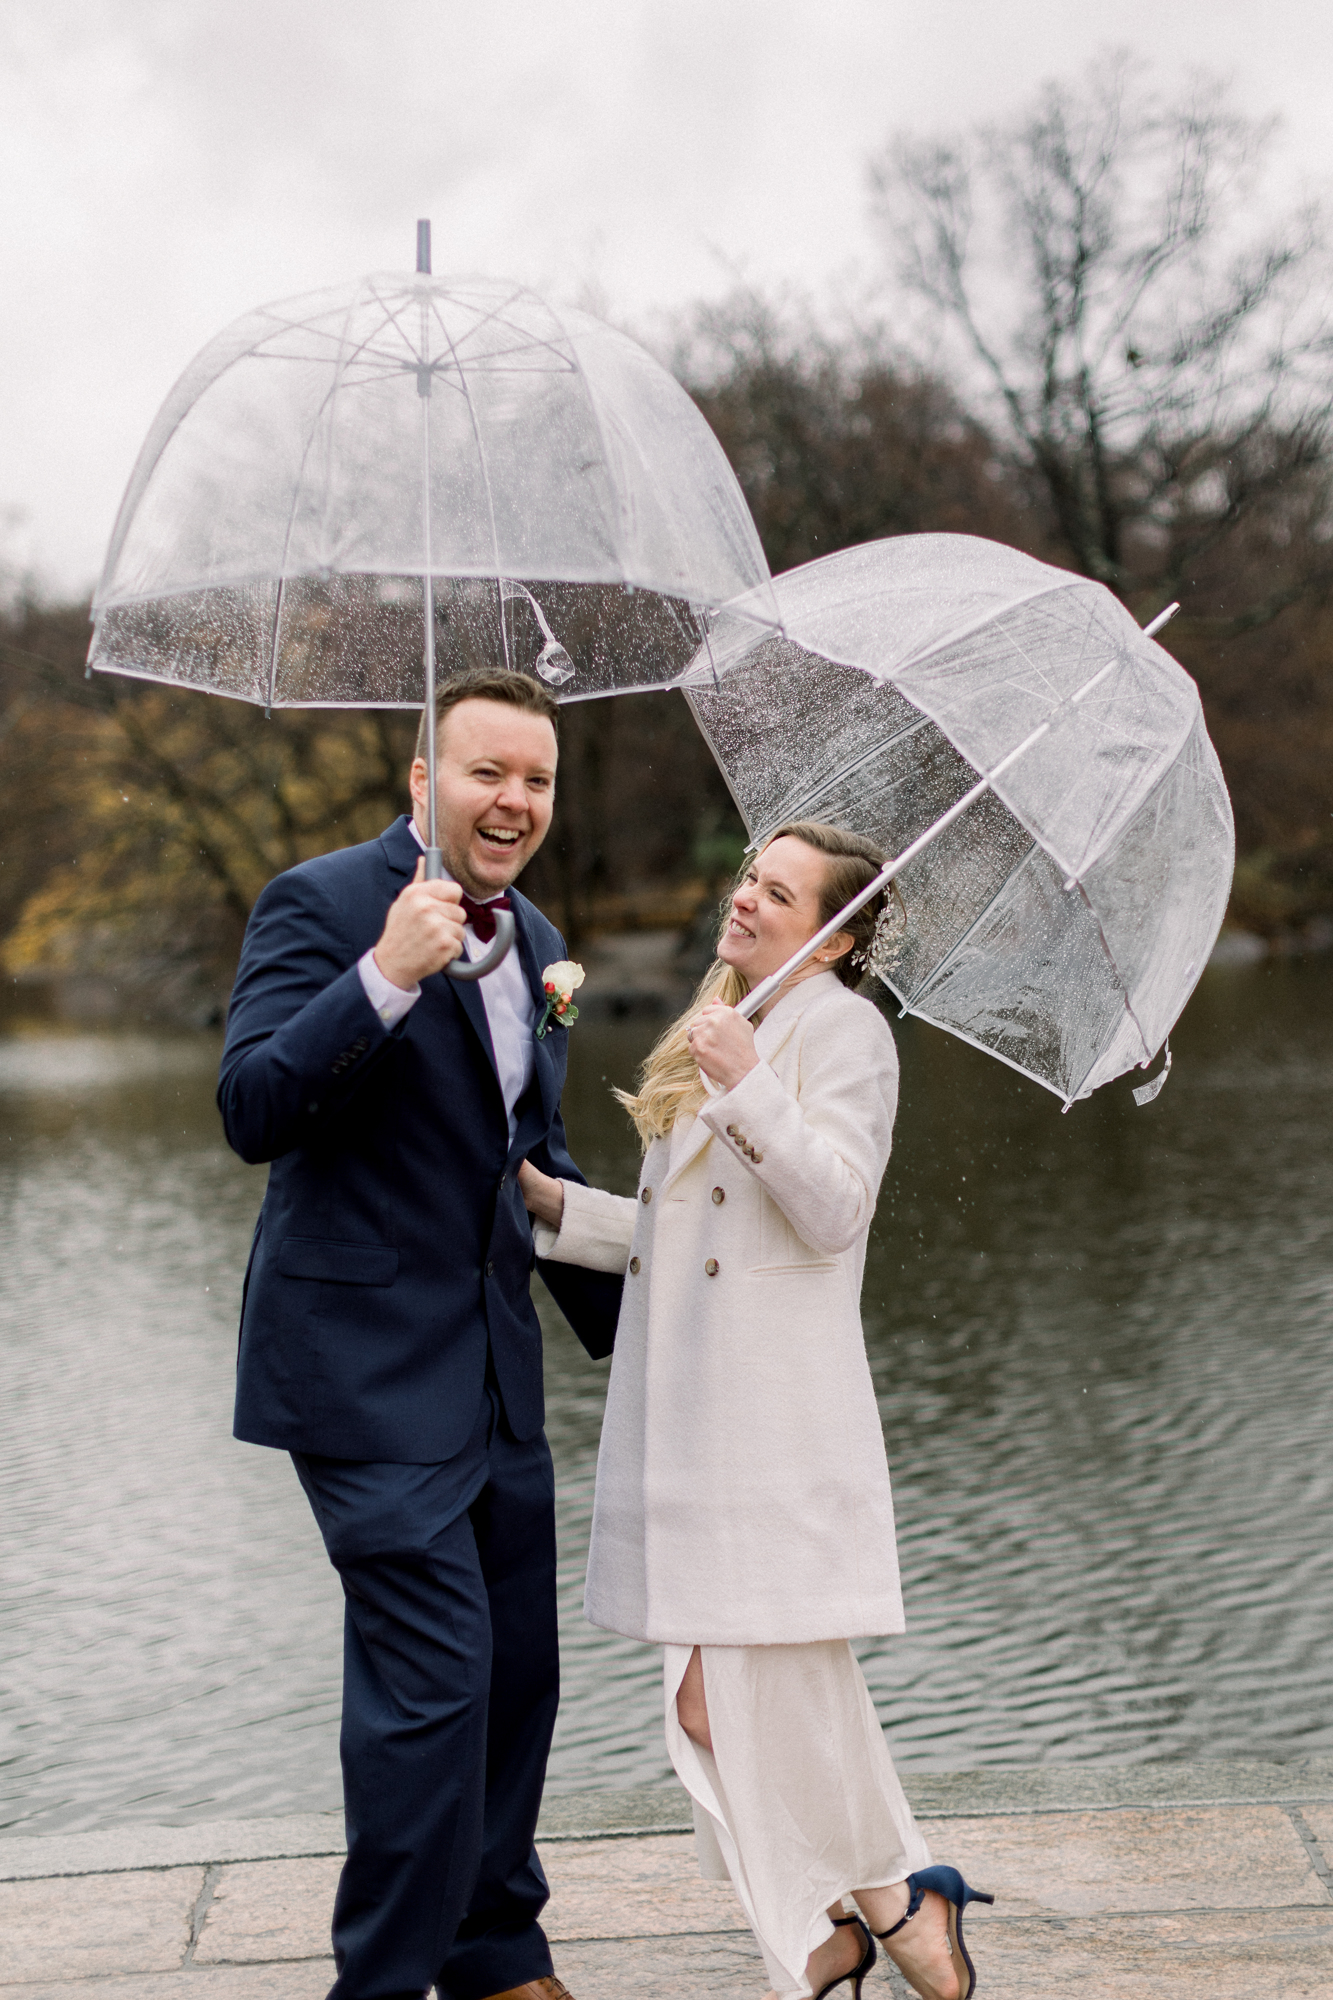 Rainy Manhattan wedding photos in Central Park